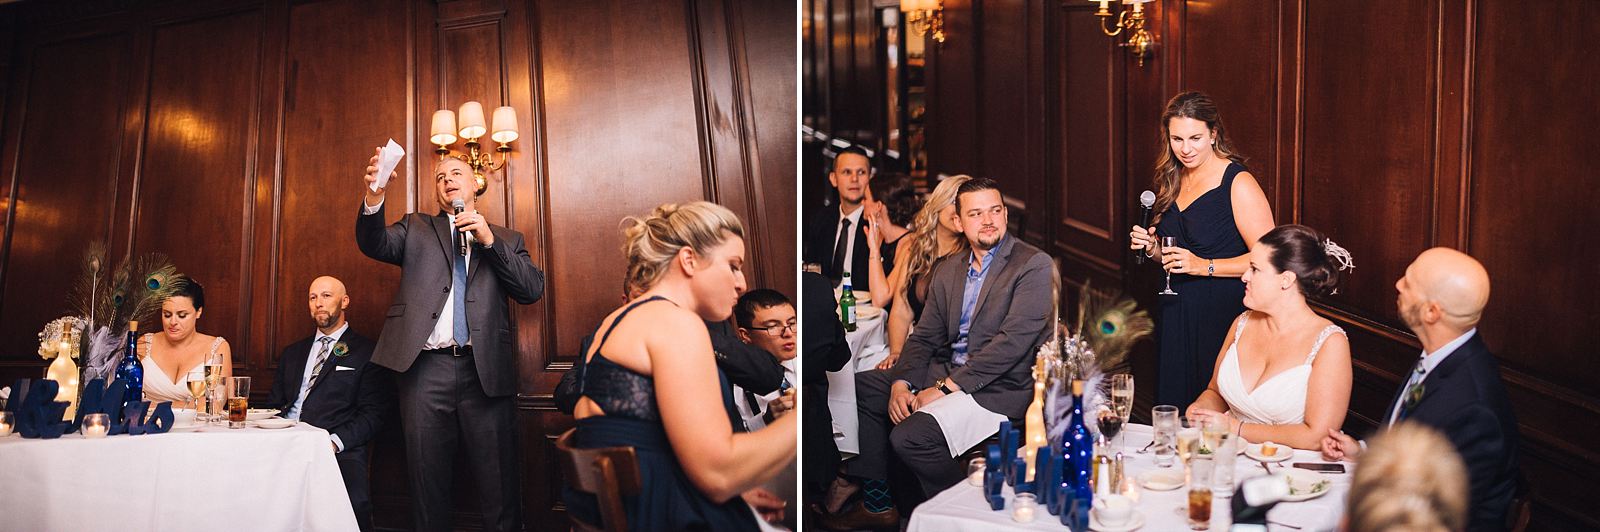 54 speeches - Salvatores Chicago Wedding Photos // Jen + Bob